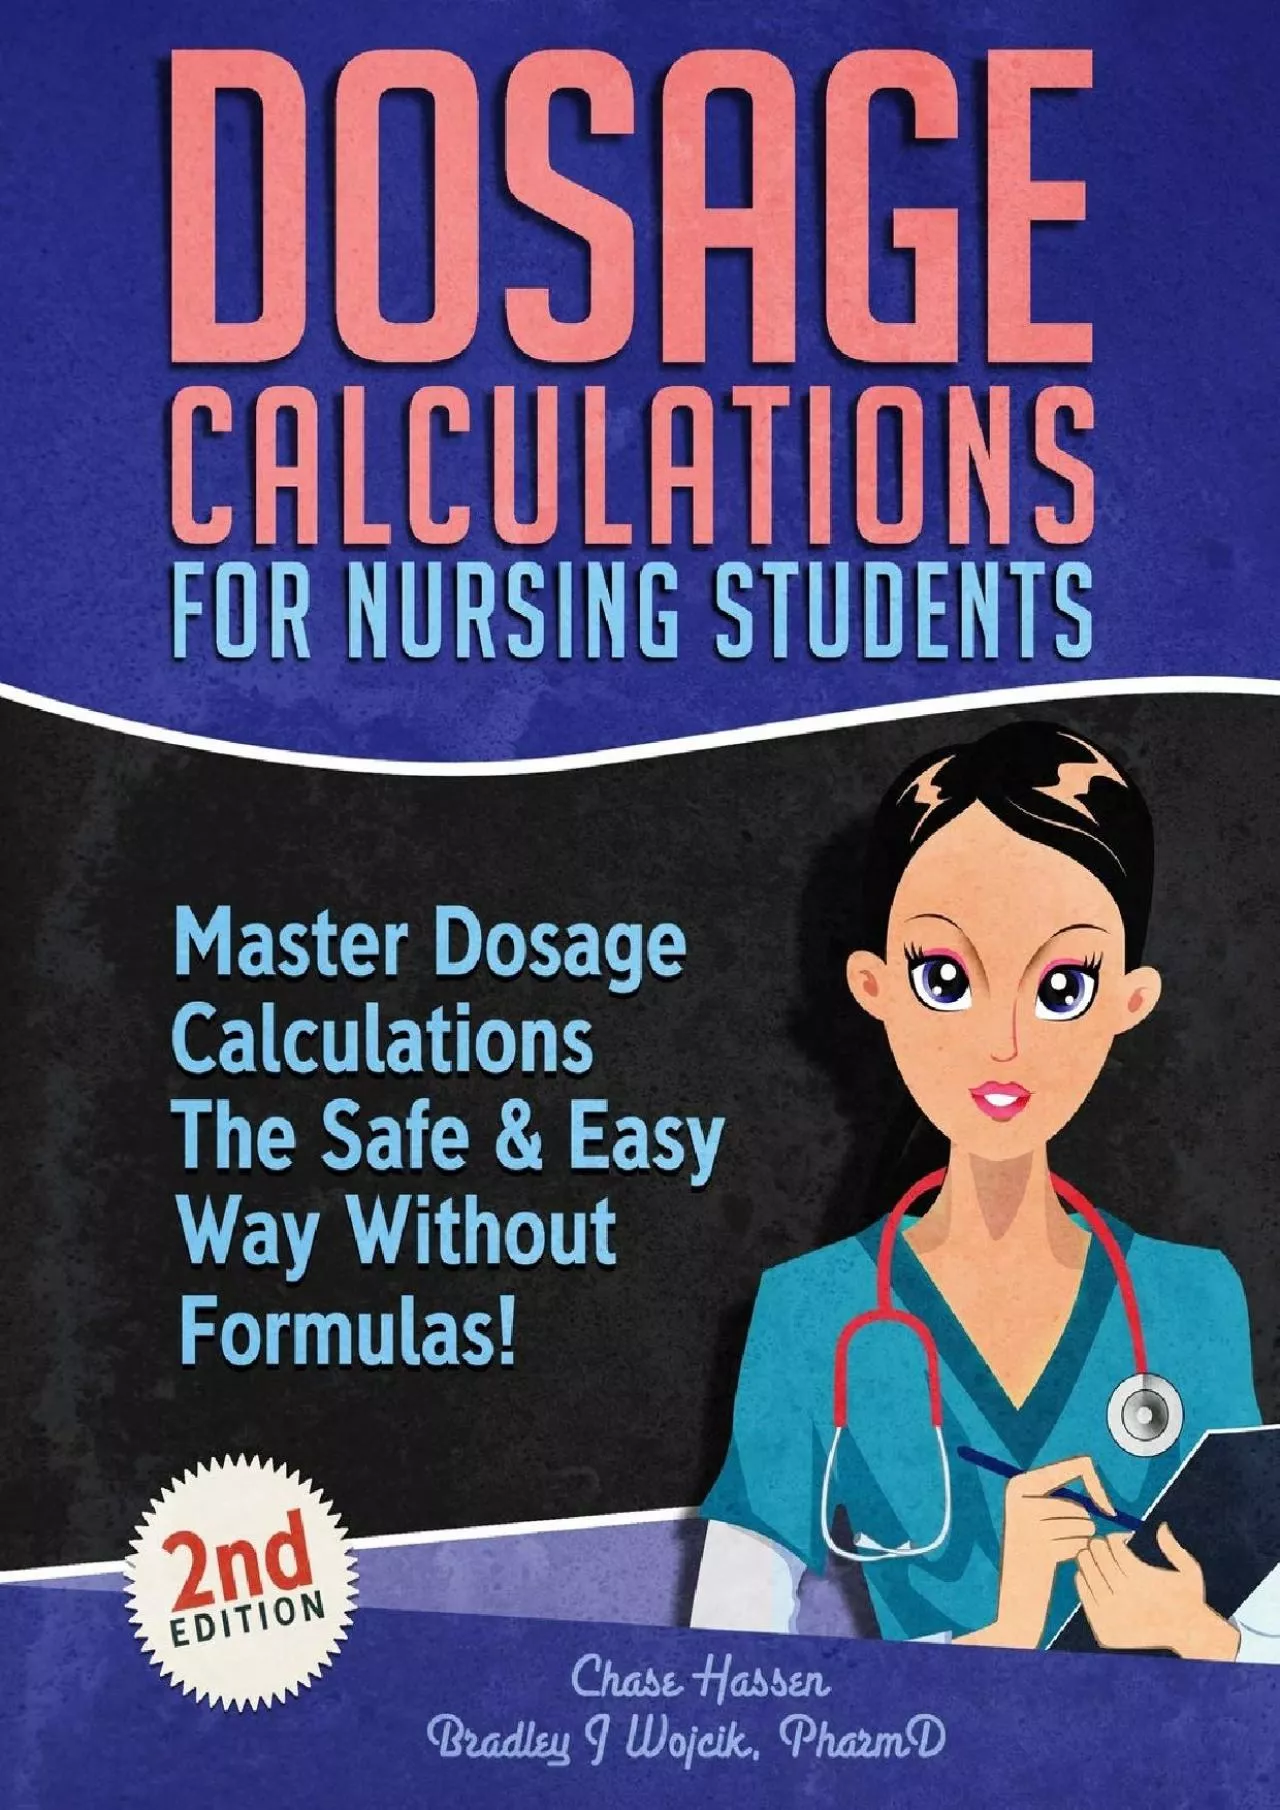 [DOWNLOAD] Dosage Calculations for Nursing Students: Master Dosage Calculations The Safe